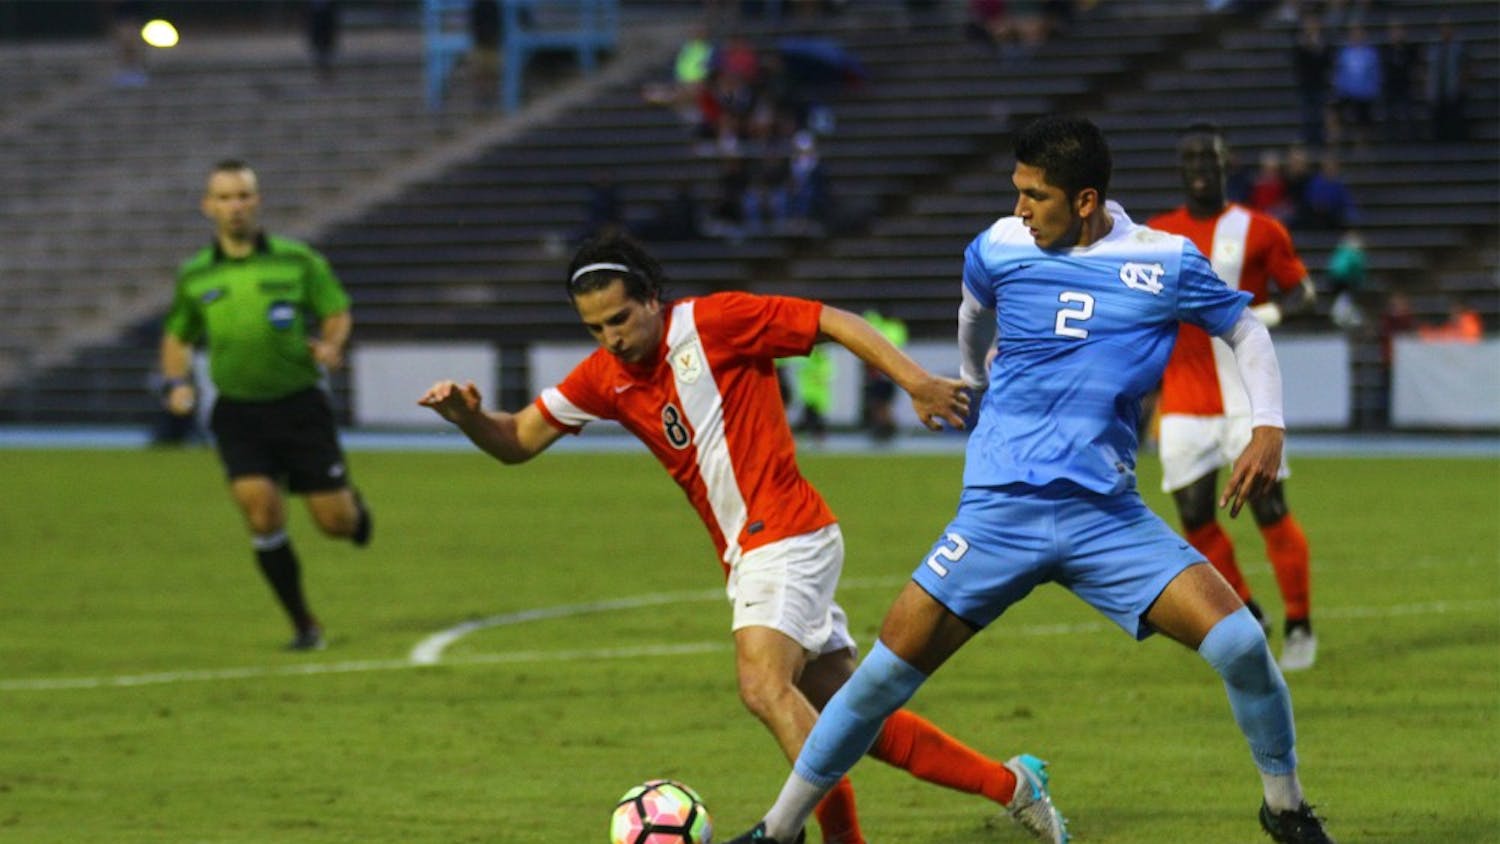 Carolina defender Mauricio Pineda battles for possession of the ball with UVA midfielder Pablo Aquilar.  